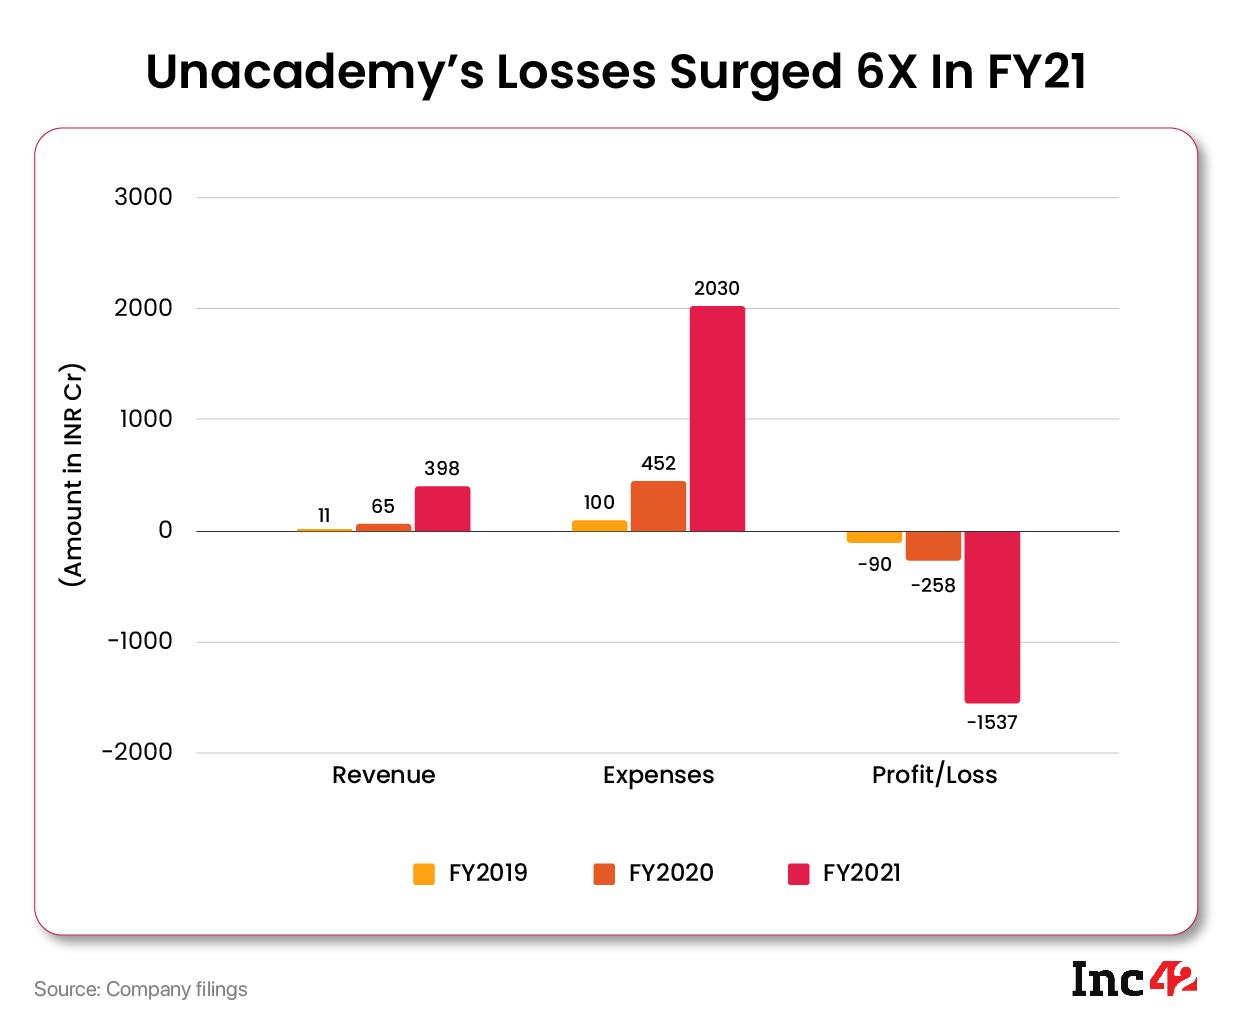 Unacademy Losses Surged 6X in FY2021